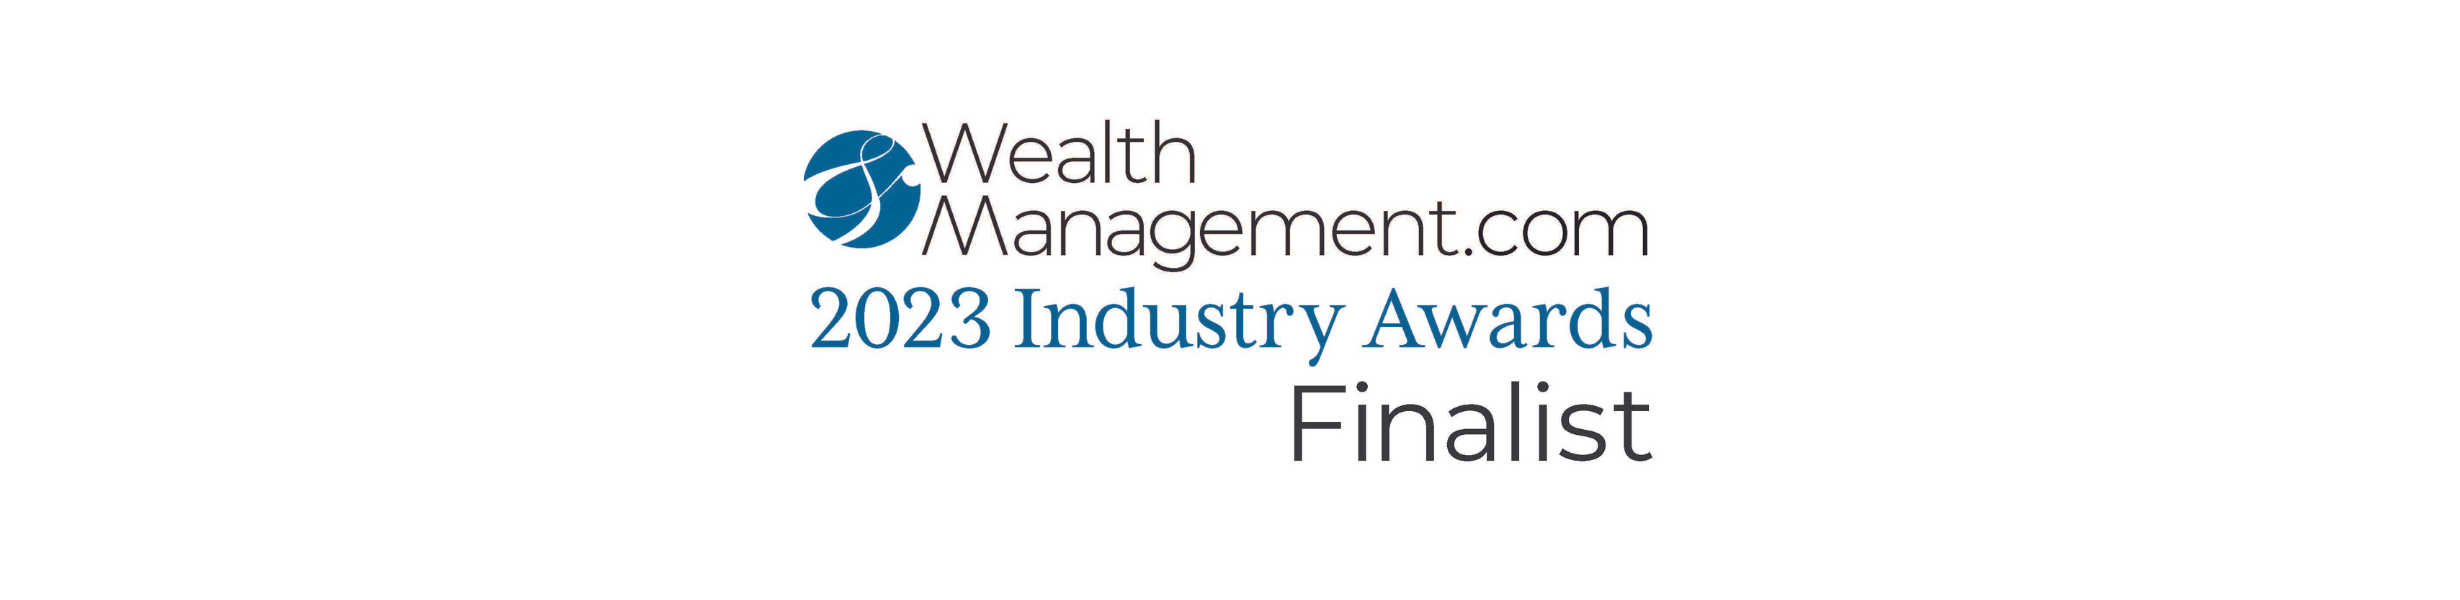 2023 WealthManagement.com Industry Awards Finalist Three Crowns Marketing